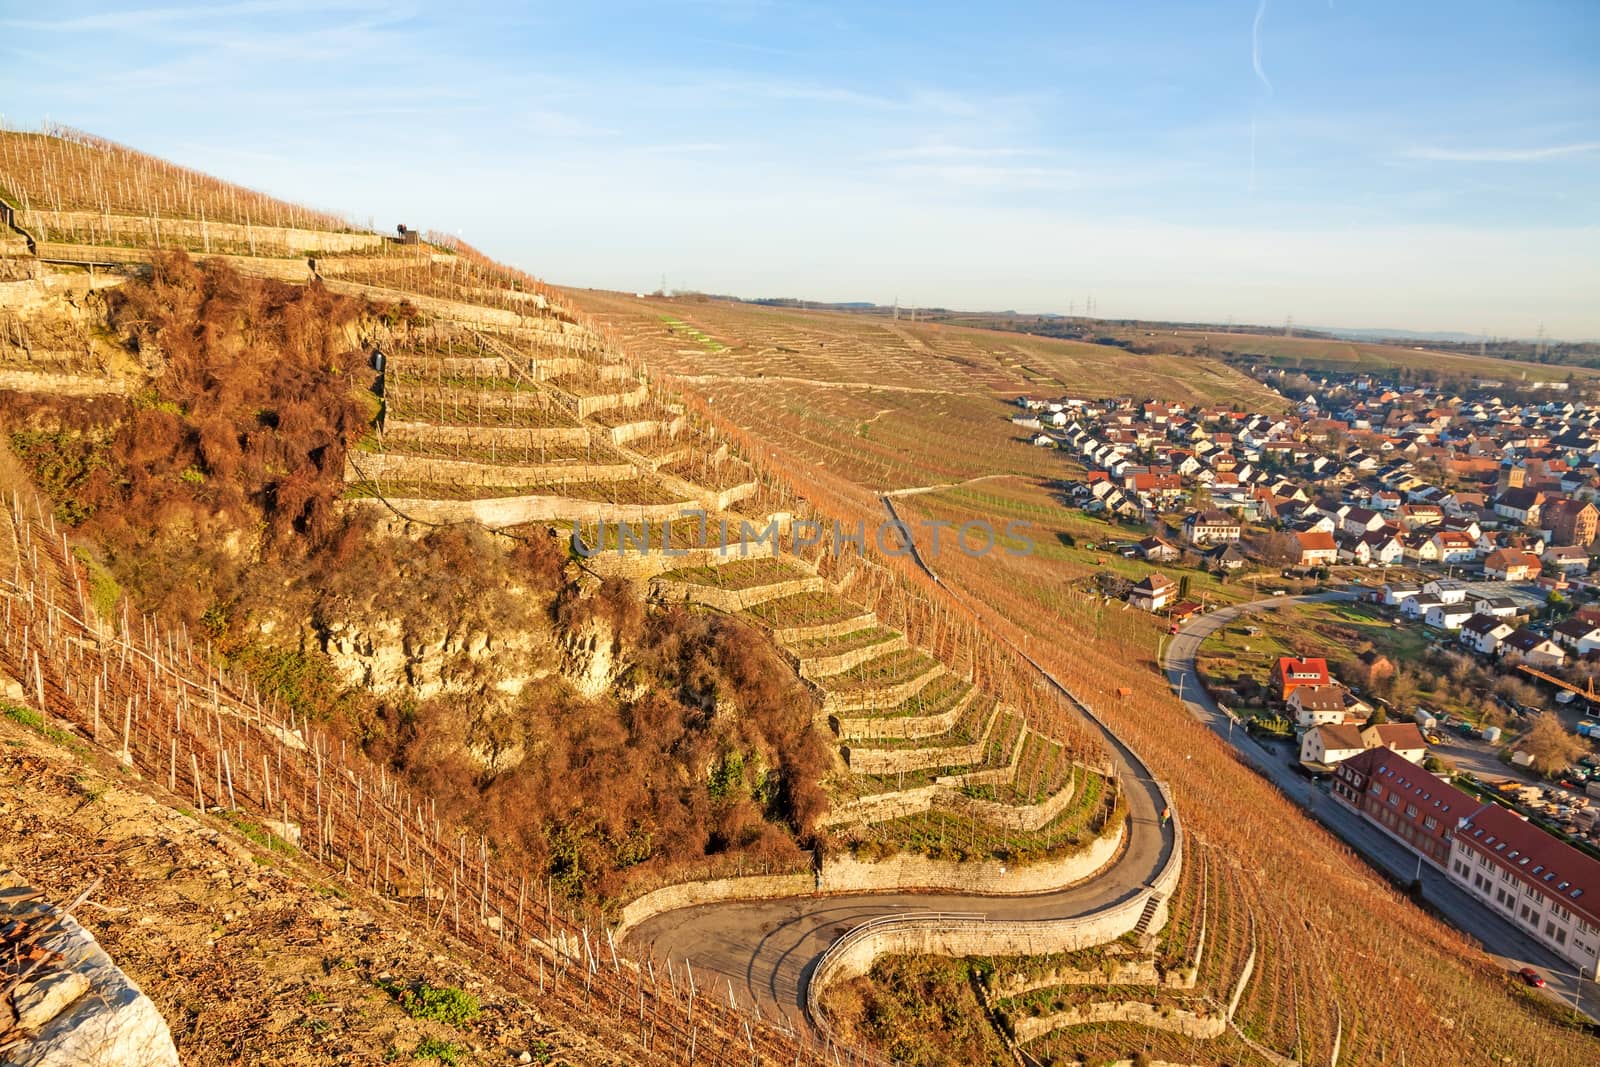 View over the vineyards (Hessigheimer Felsengaerten), town Hessigheim on the right